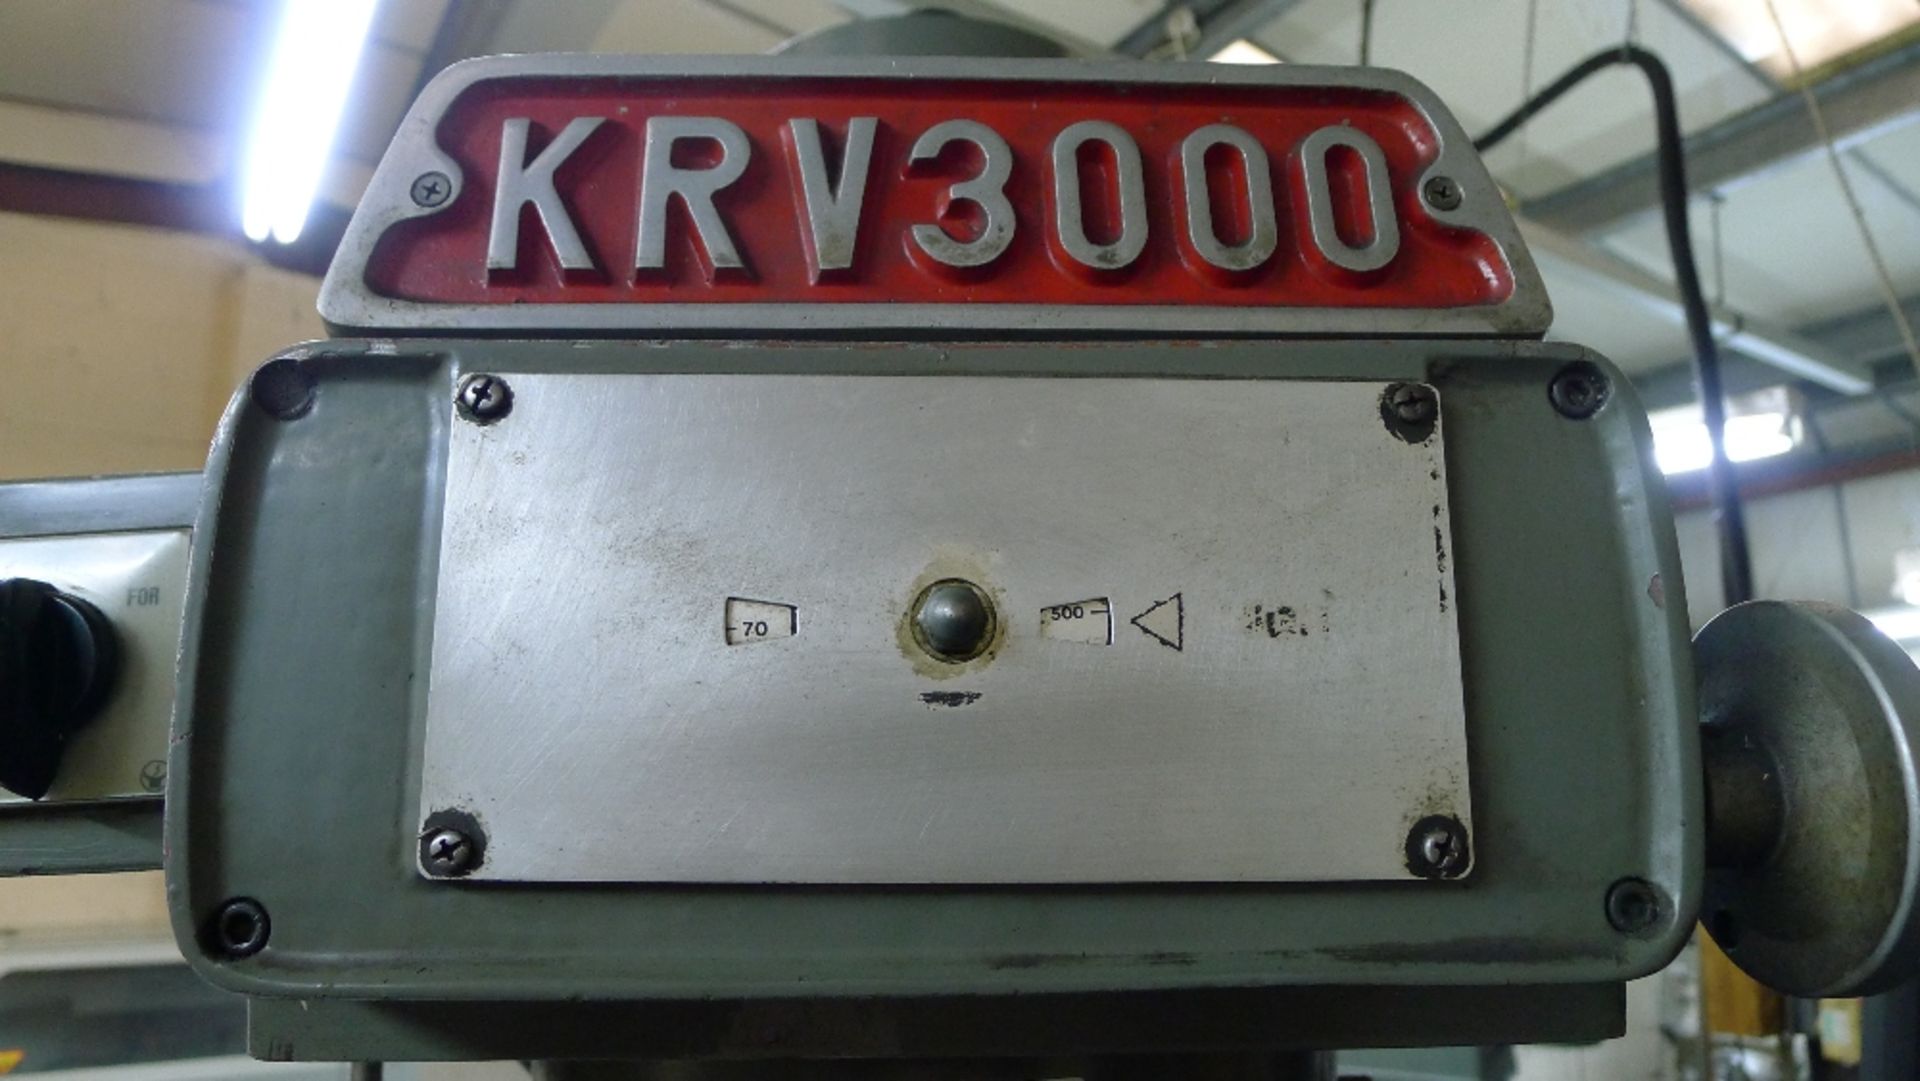 1 milling machine by XYZ model KRV 3000, serial no. 7392, YOM 1995, 3ph, table size 1.37cm x 30cm, - Image 4 of 11